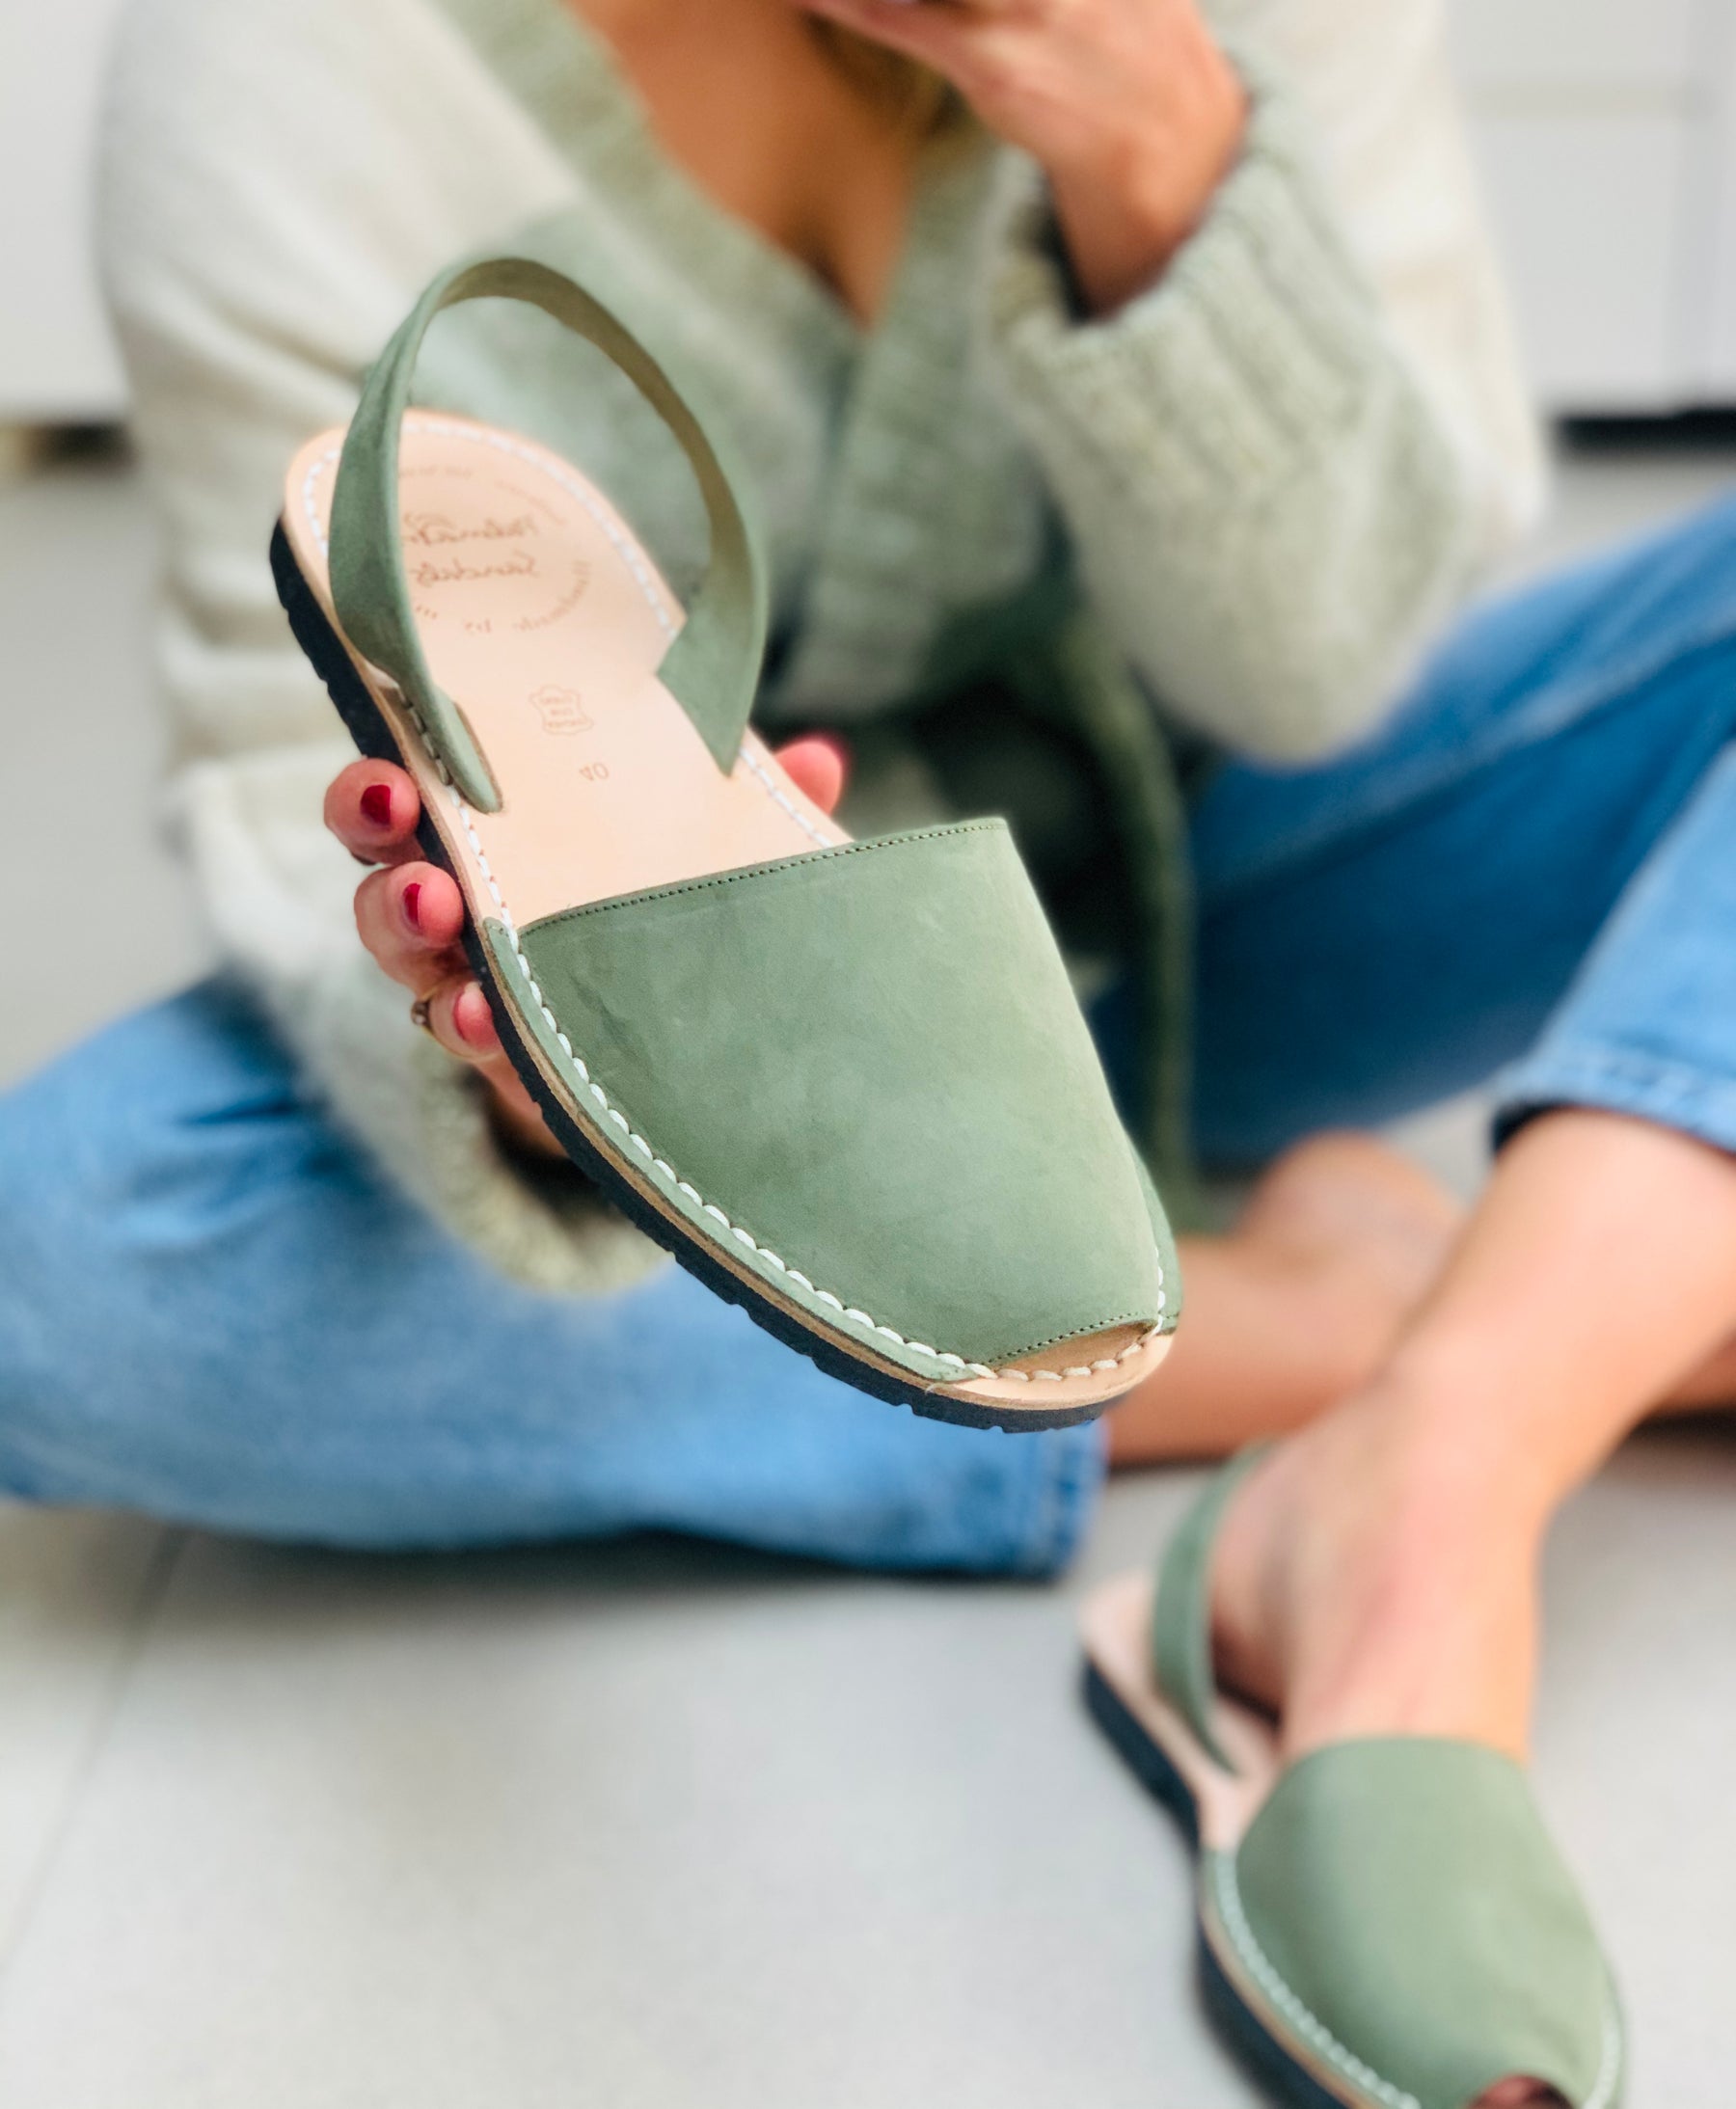 Khaki nubuck leather spanish menorcan avarcas sandals